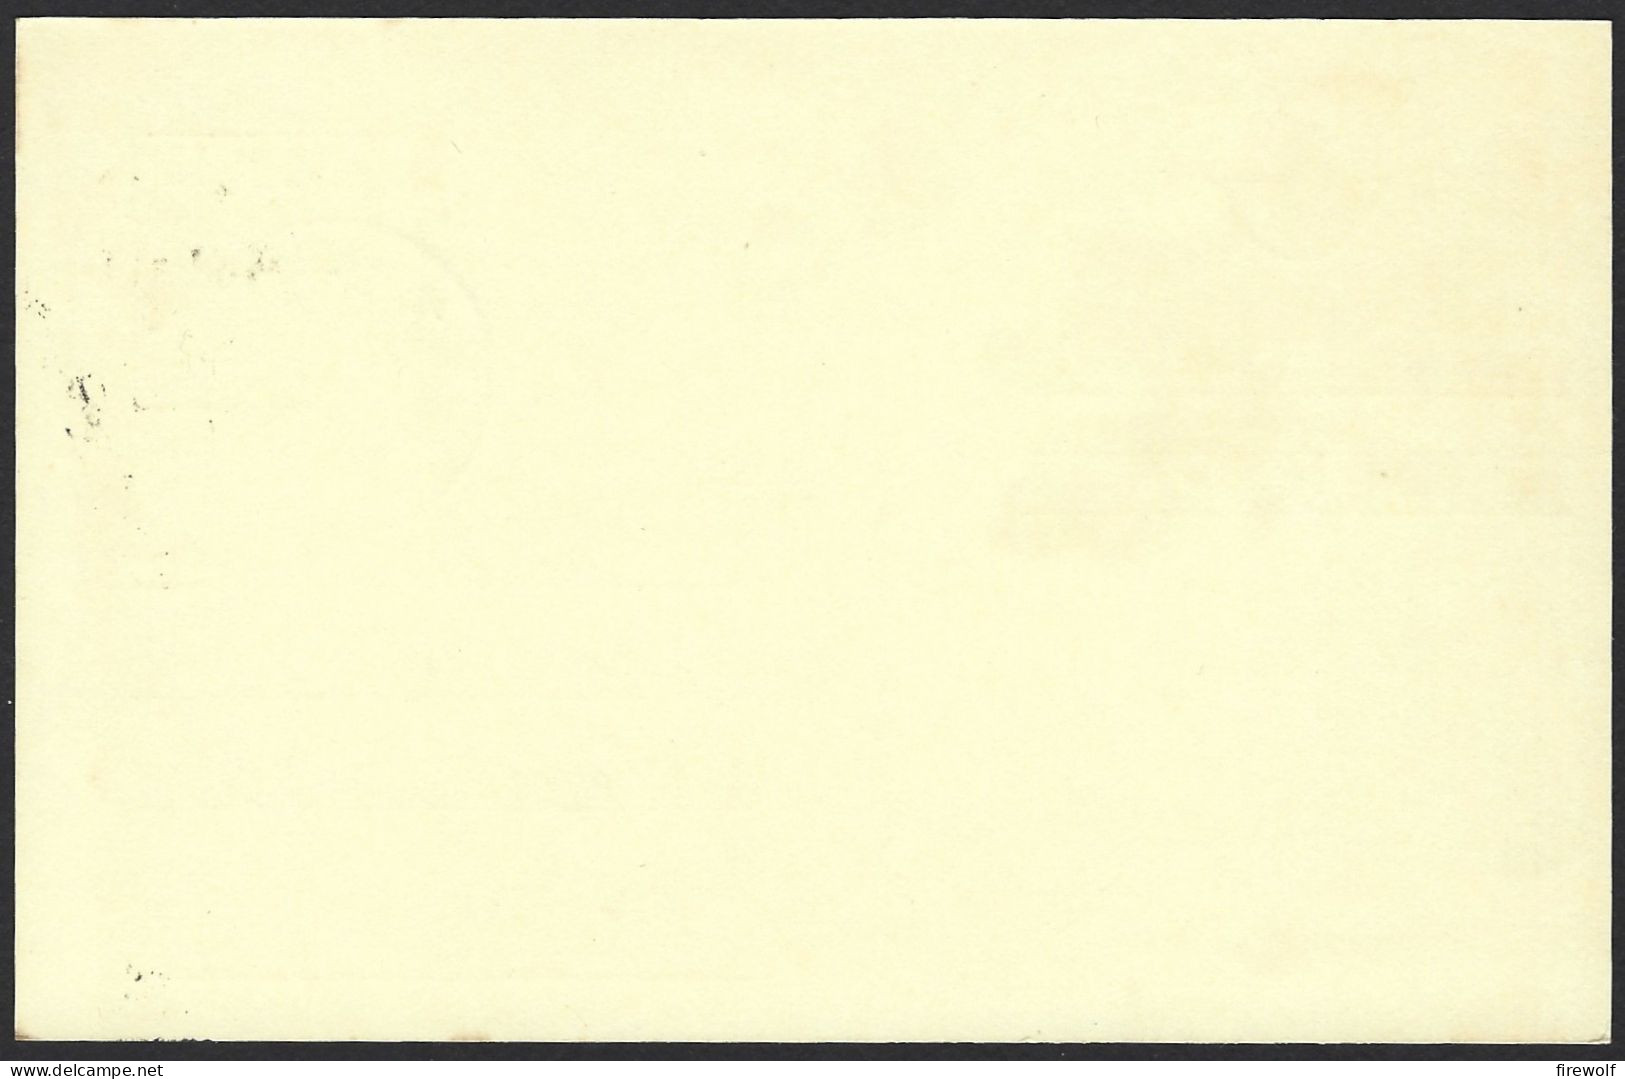 W09 - Belgium 1986 Postal Stationery - Sbep 196 IV N Used Herselt - Buzin Bird - Postcards 1951-..